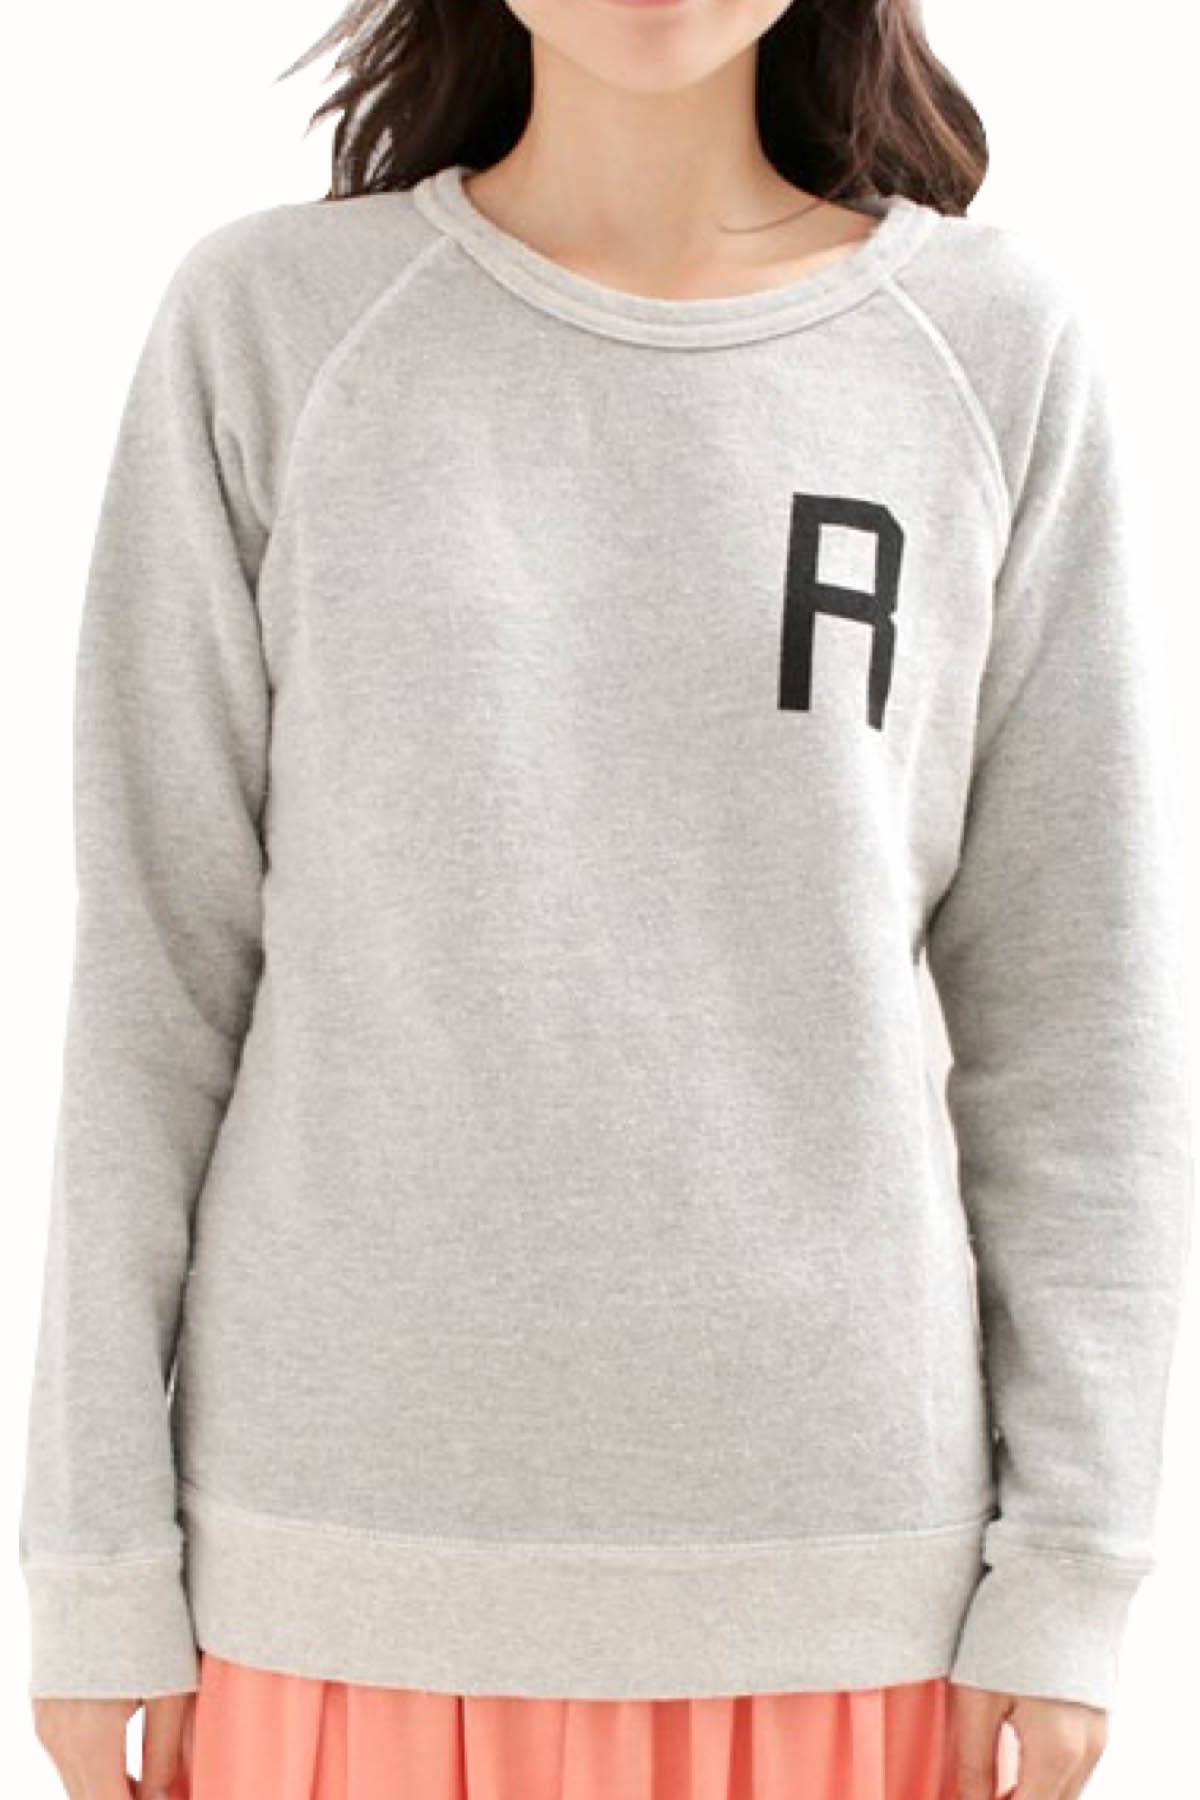 Rxmance Unisex White Sand 'R-10' Sweatshirt